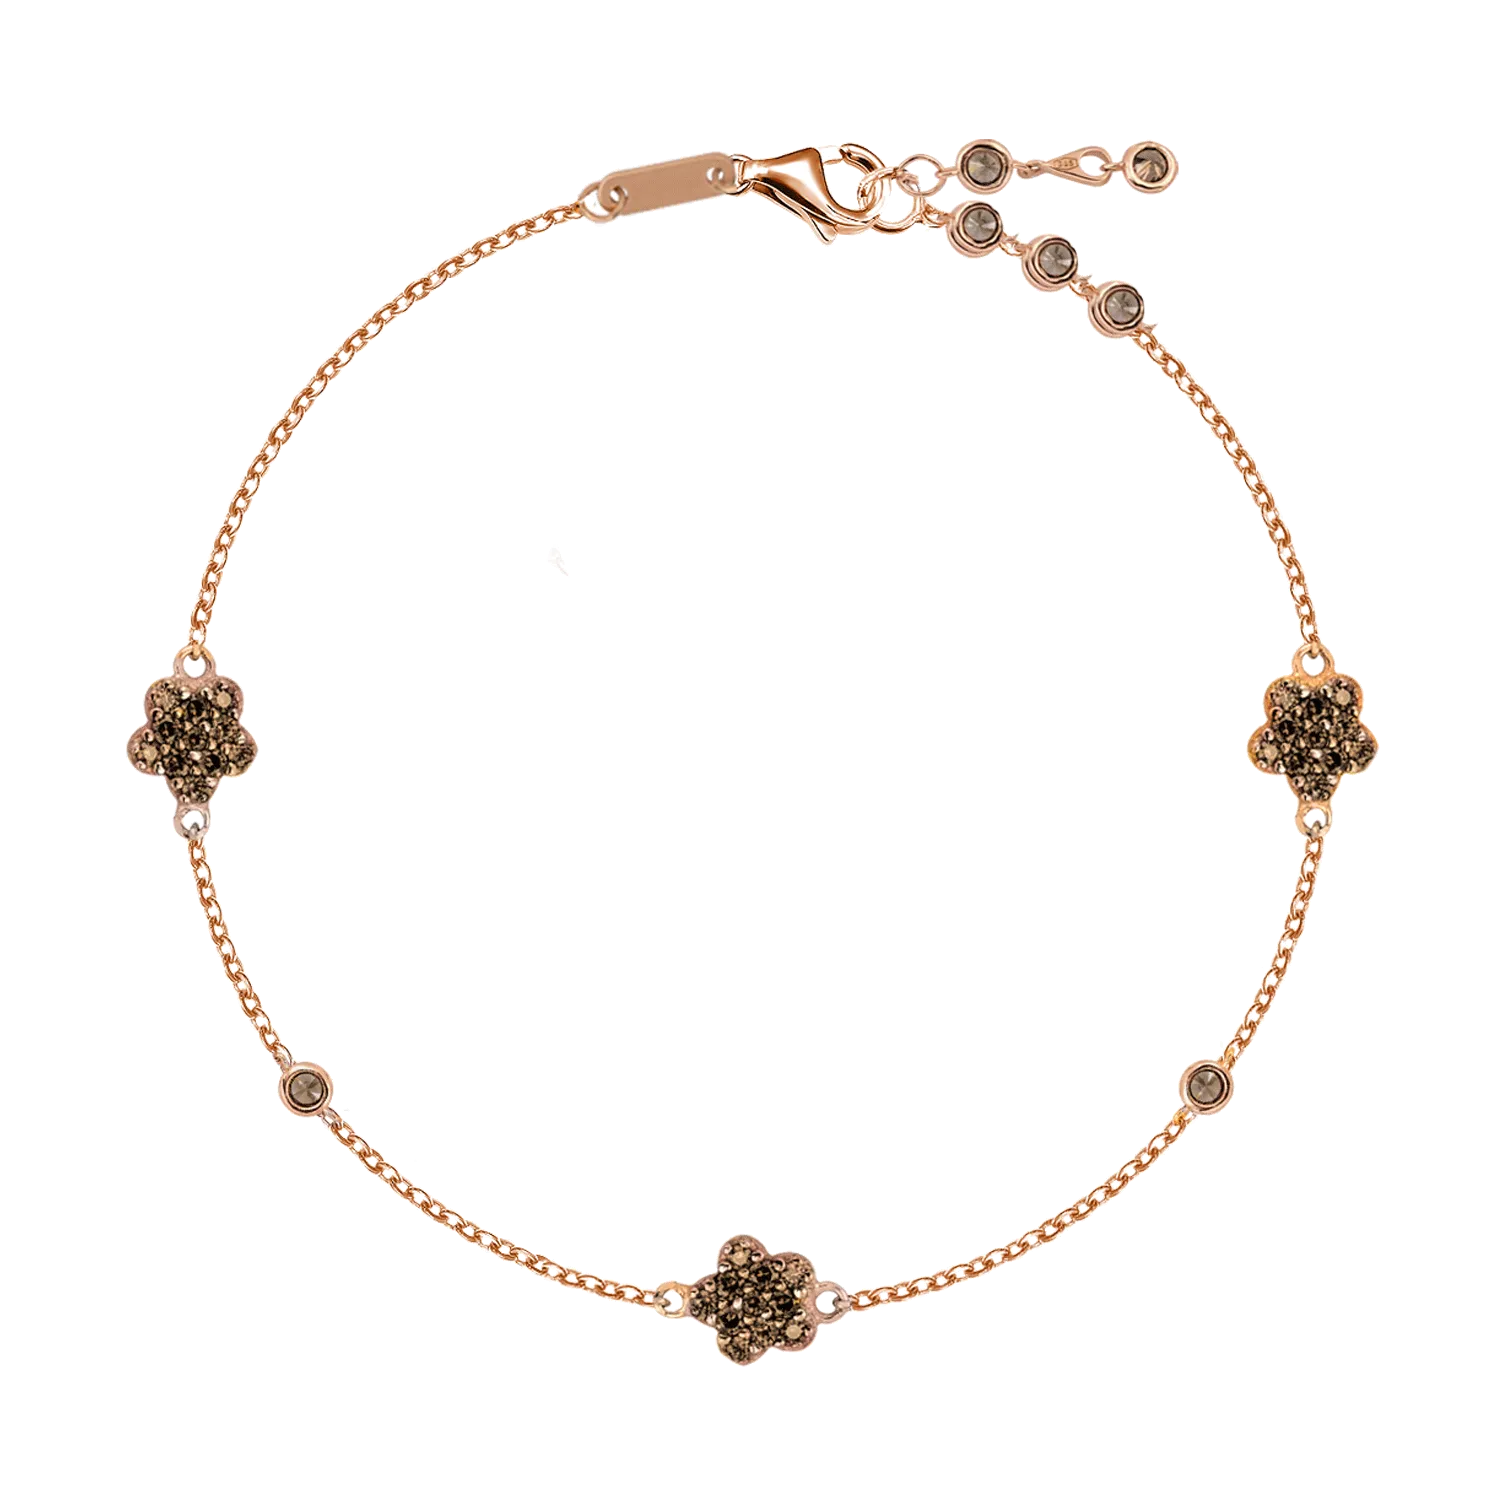 Rose gold bracelet with flower pendants